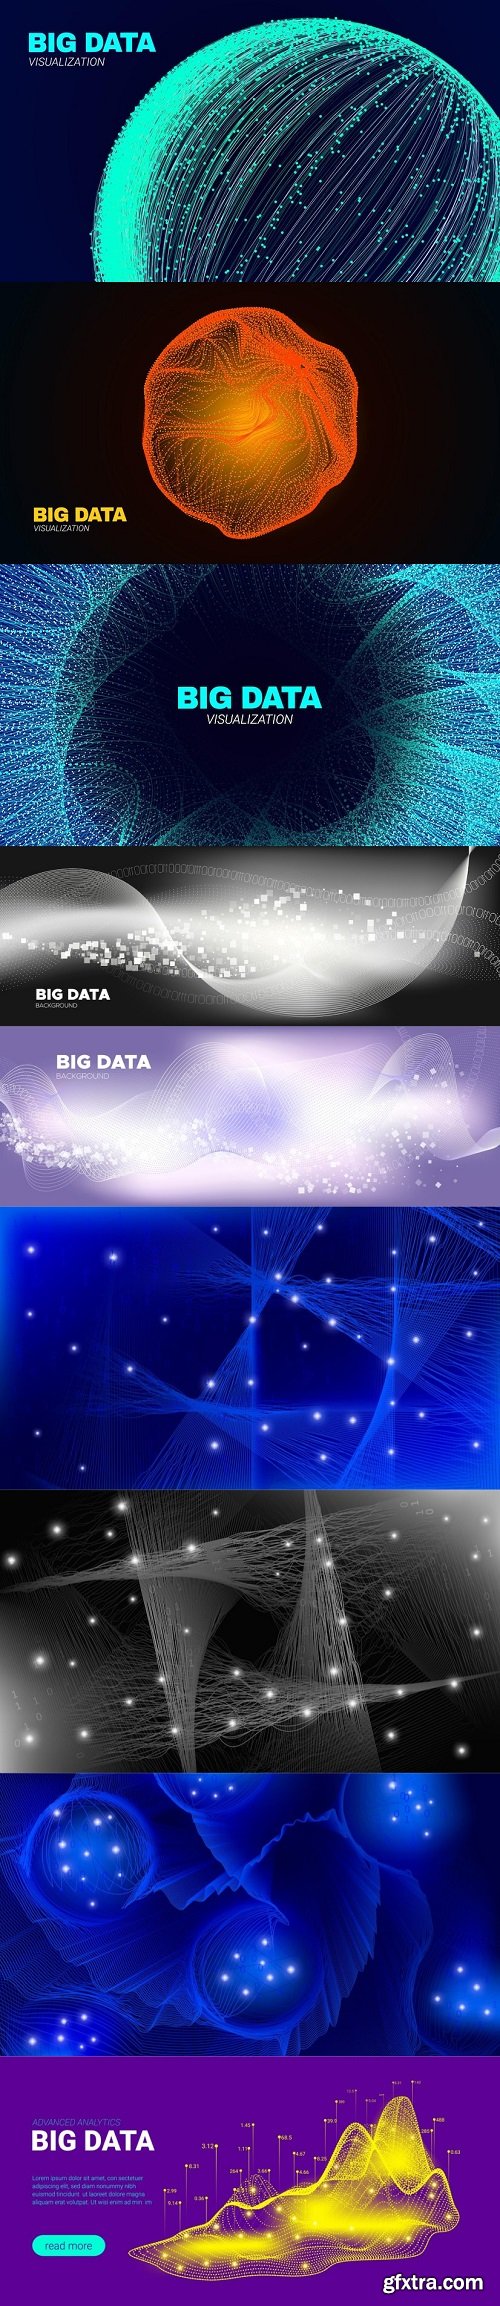 Big data backgrounds